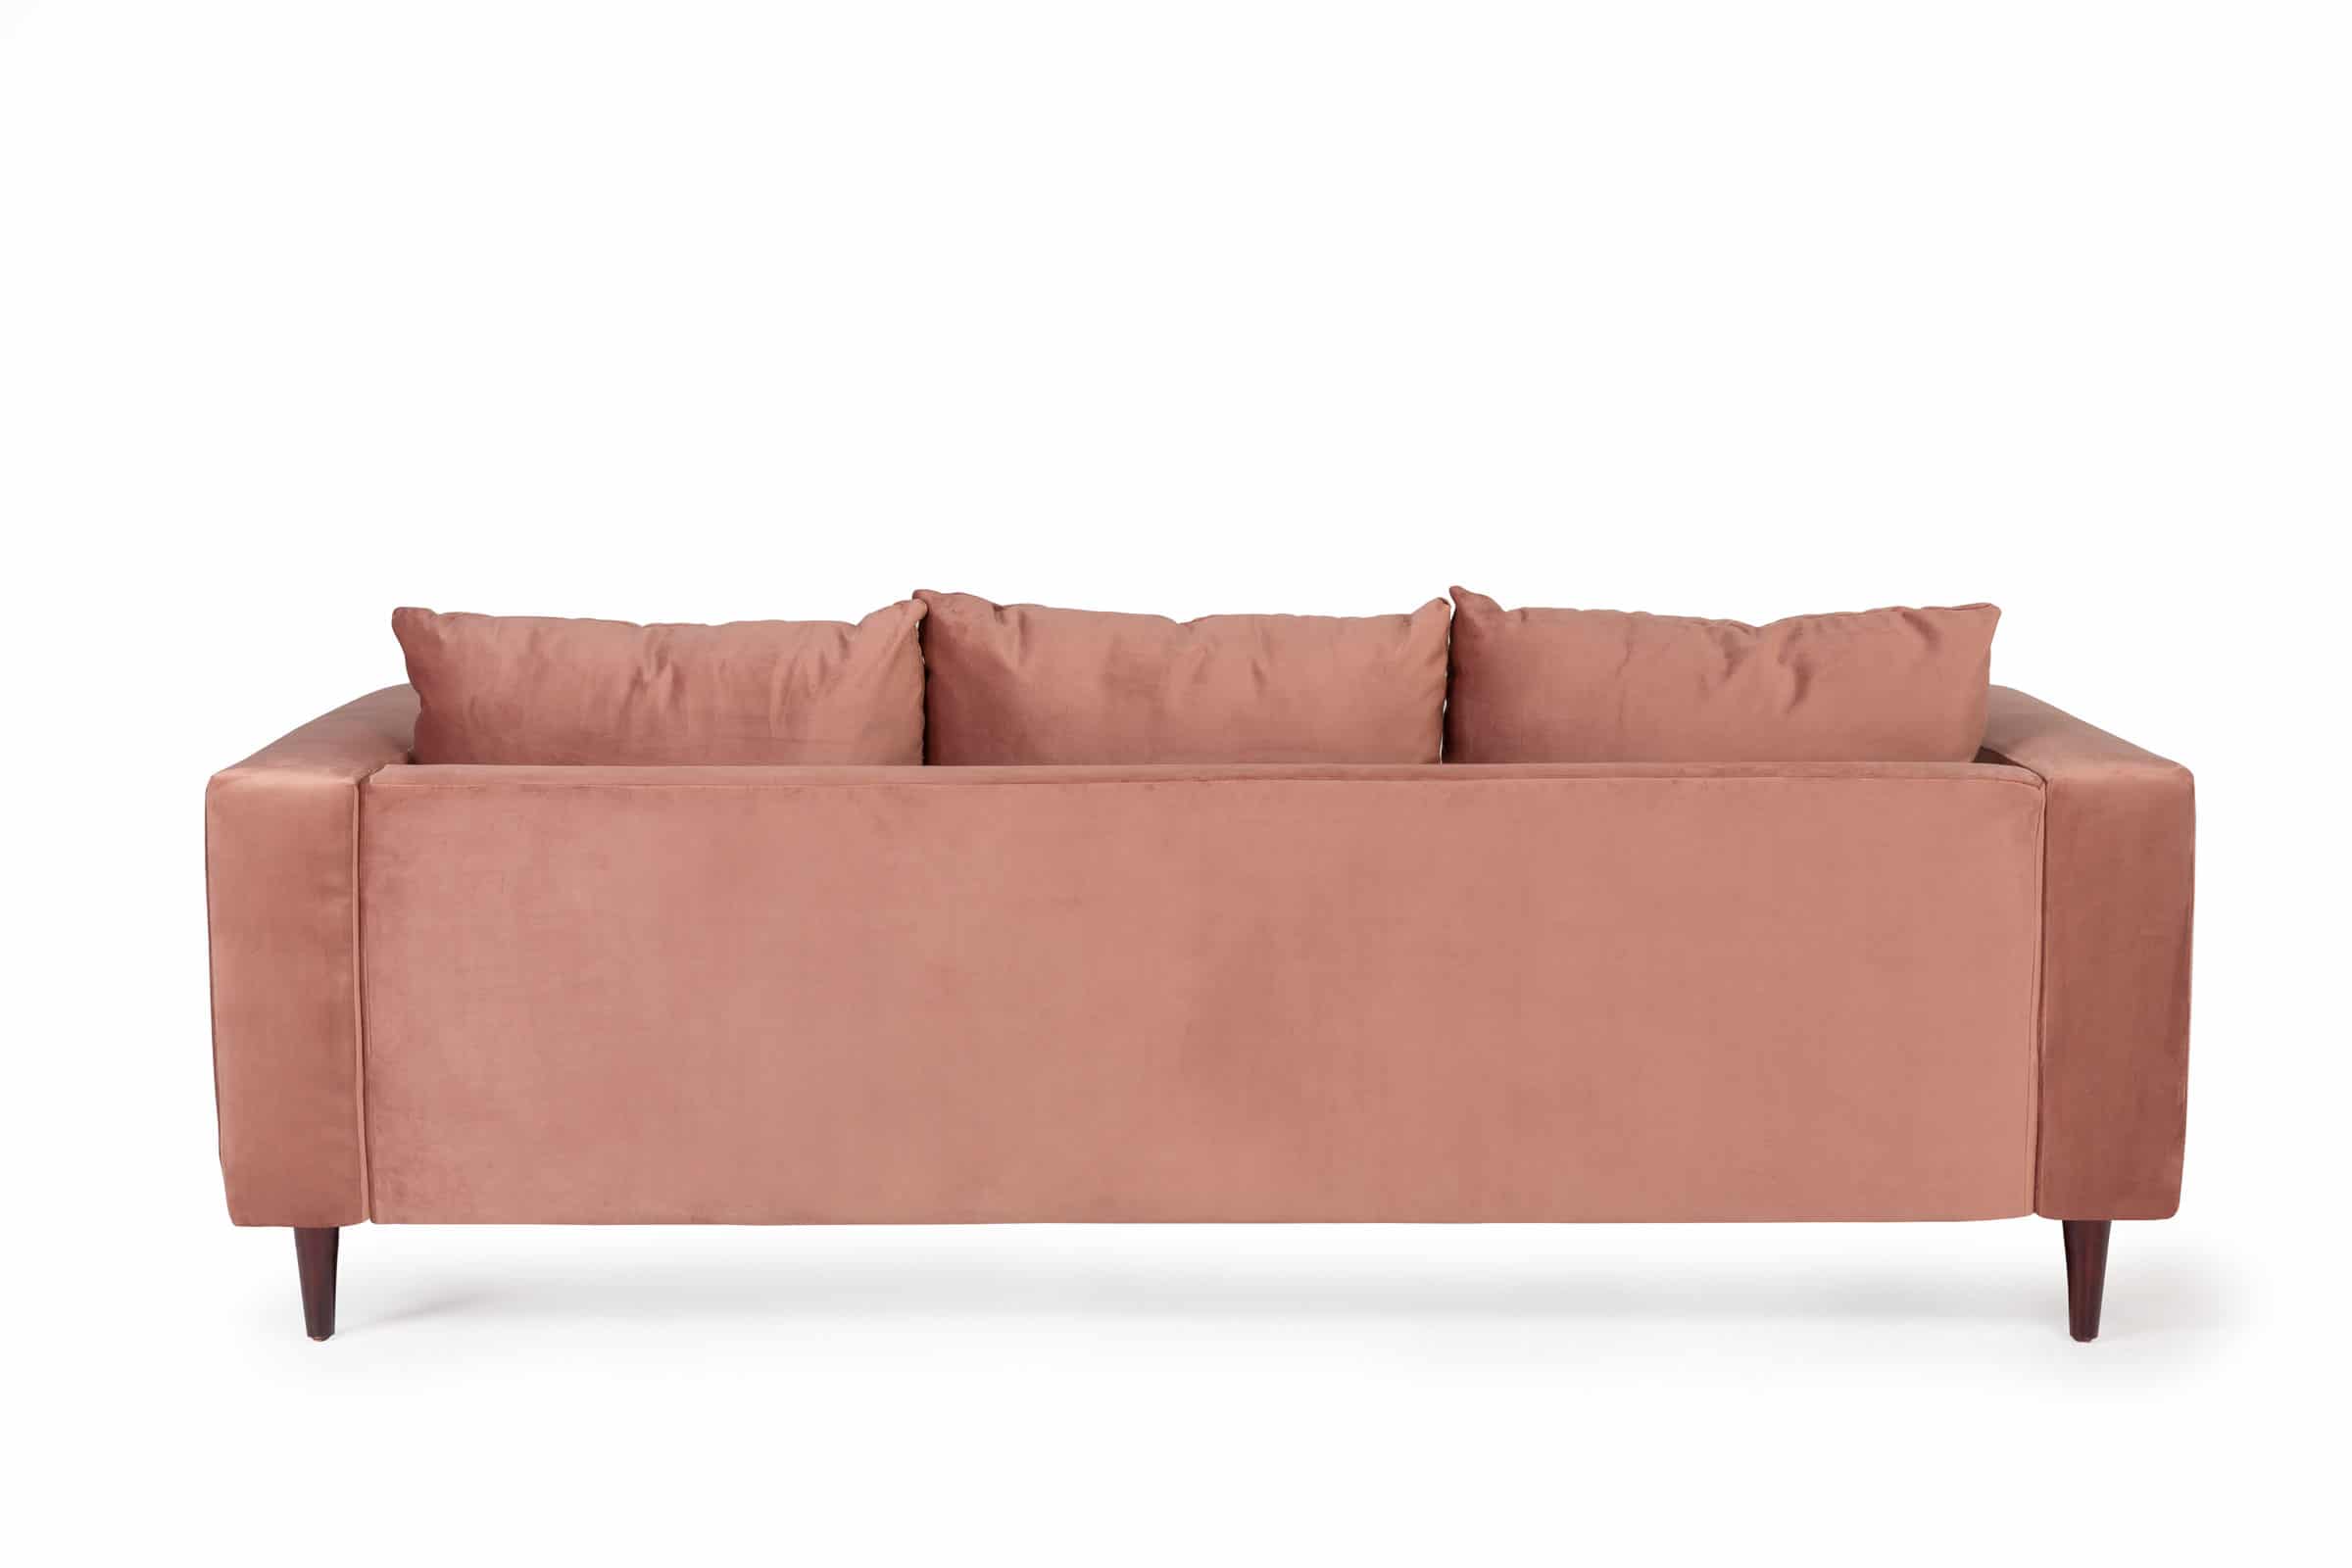 sabai sofa sustainable furniture gbd magazine 02